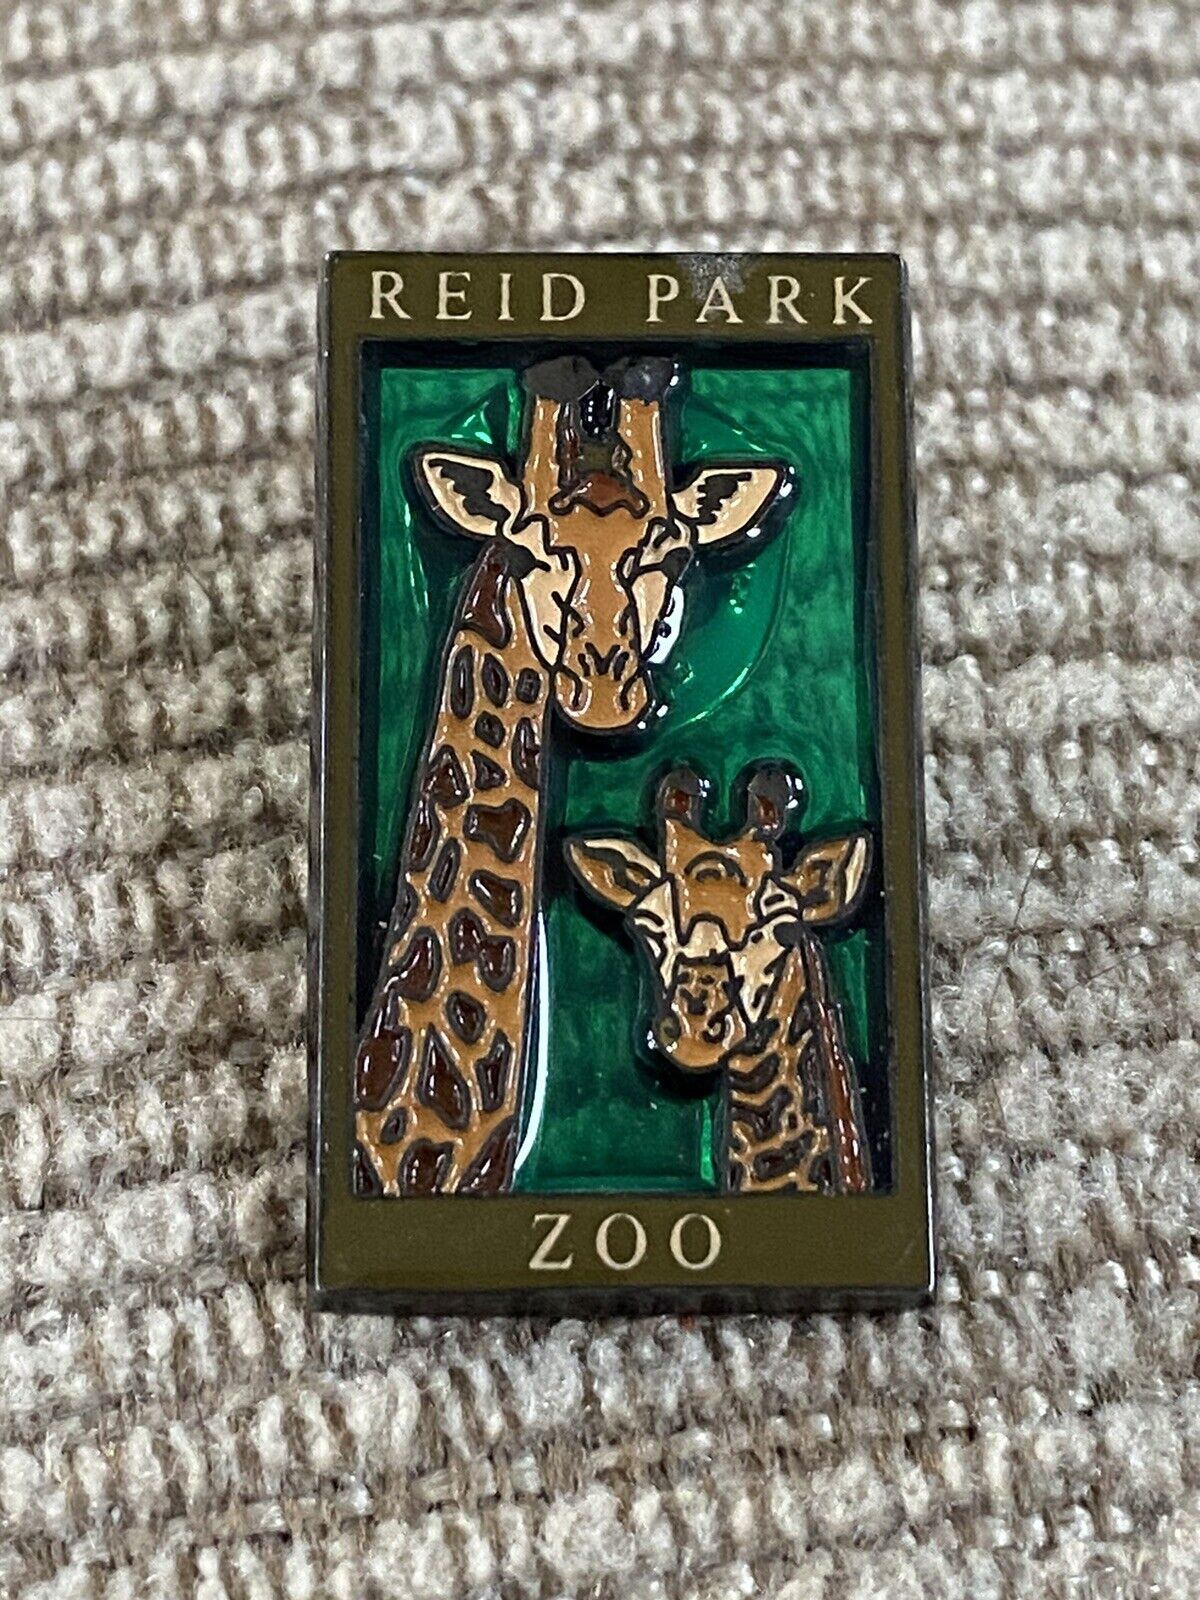 Vintage Reid Park Zoo Giraffe Pin Shirt Or Hat Pin